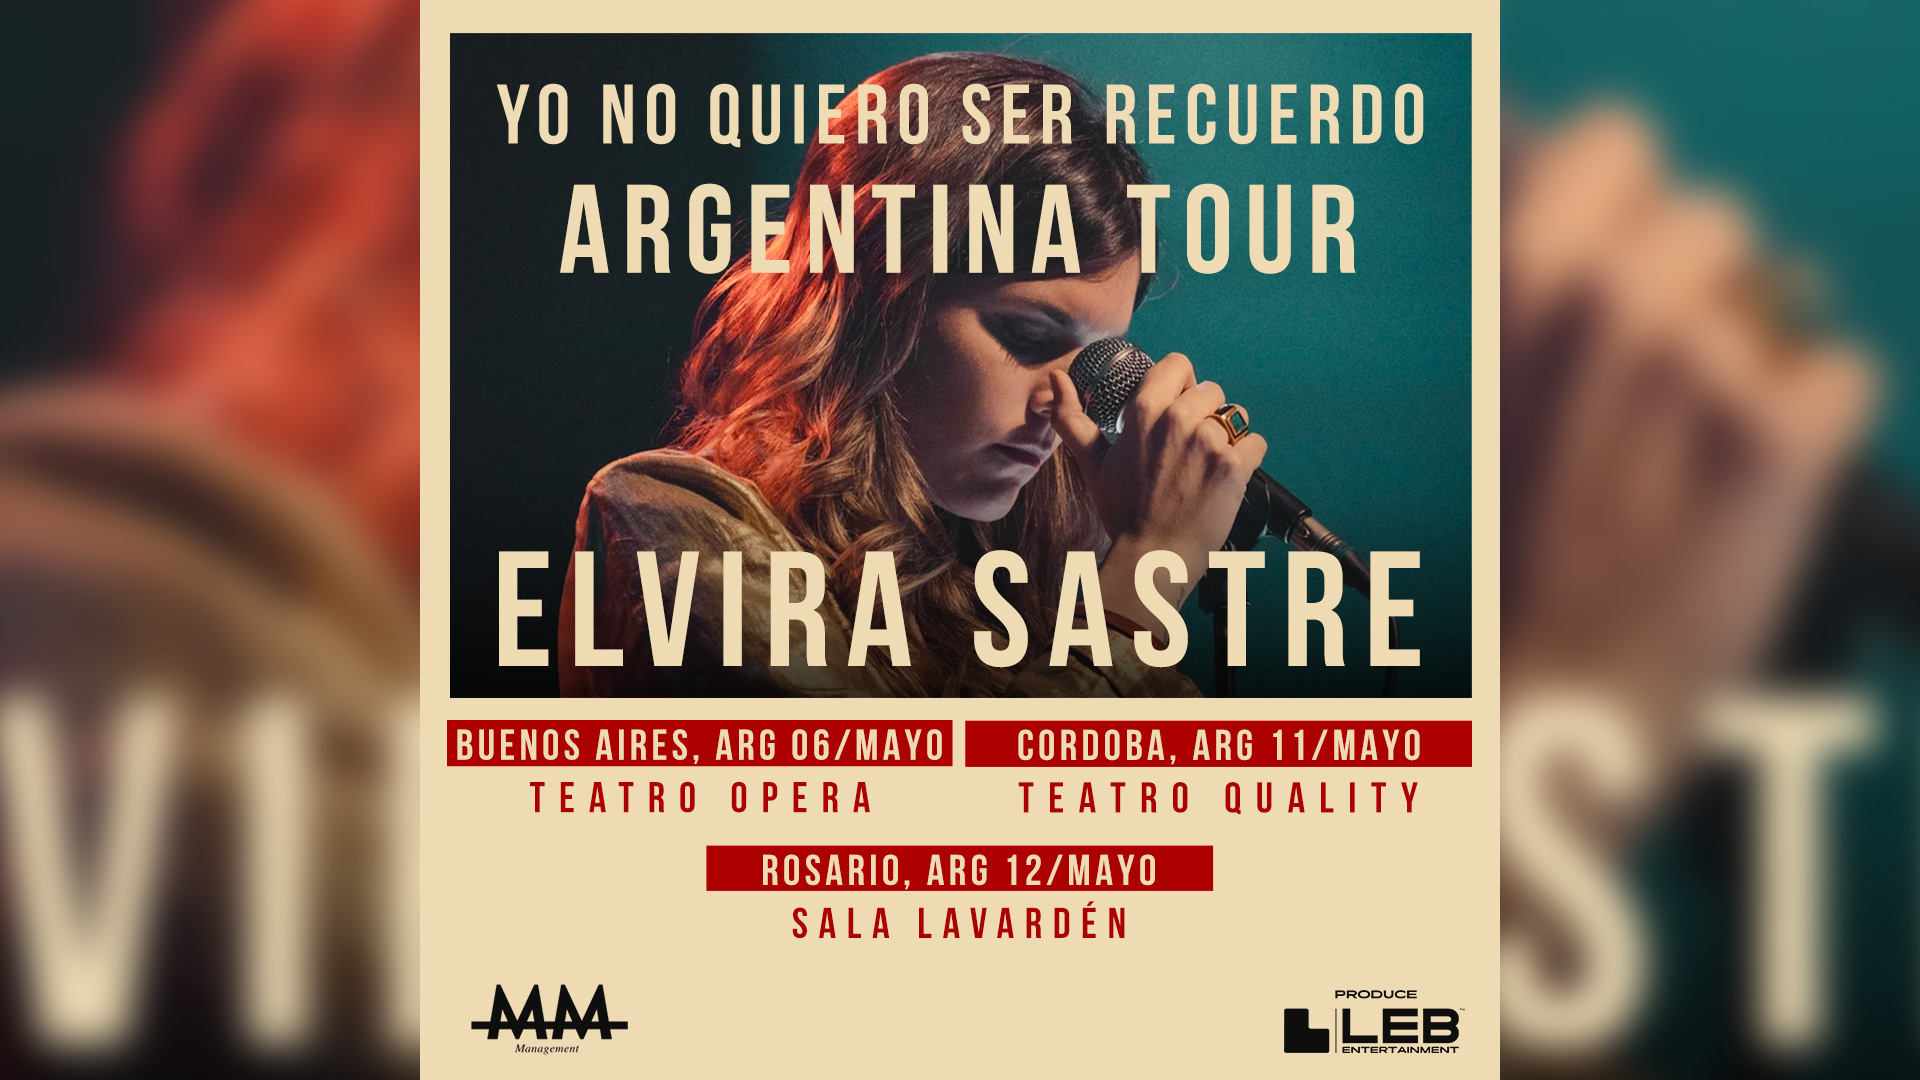 Elvira Sastre vuelve a presentarse en Argentina en mayo de 2023